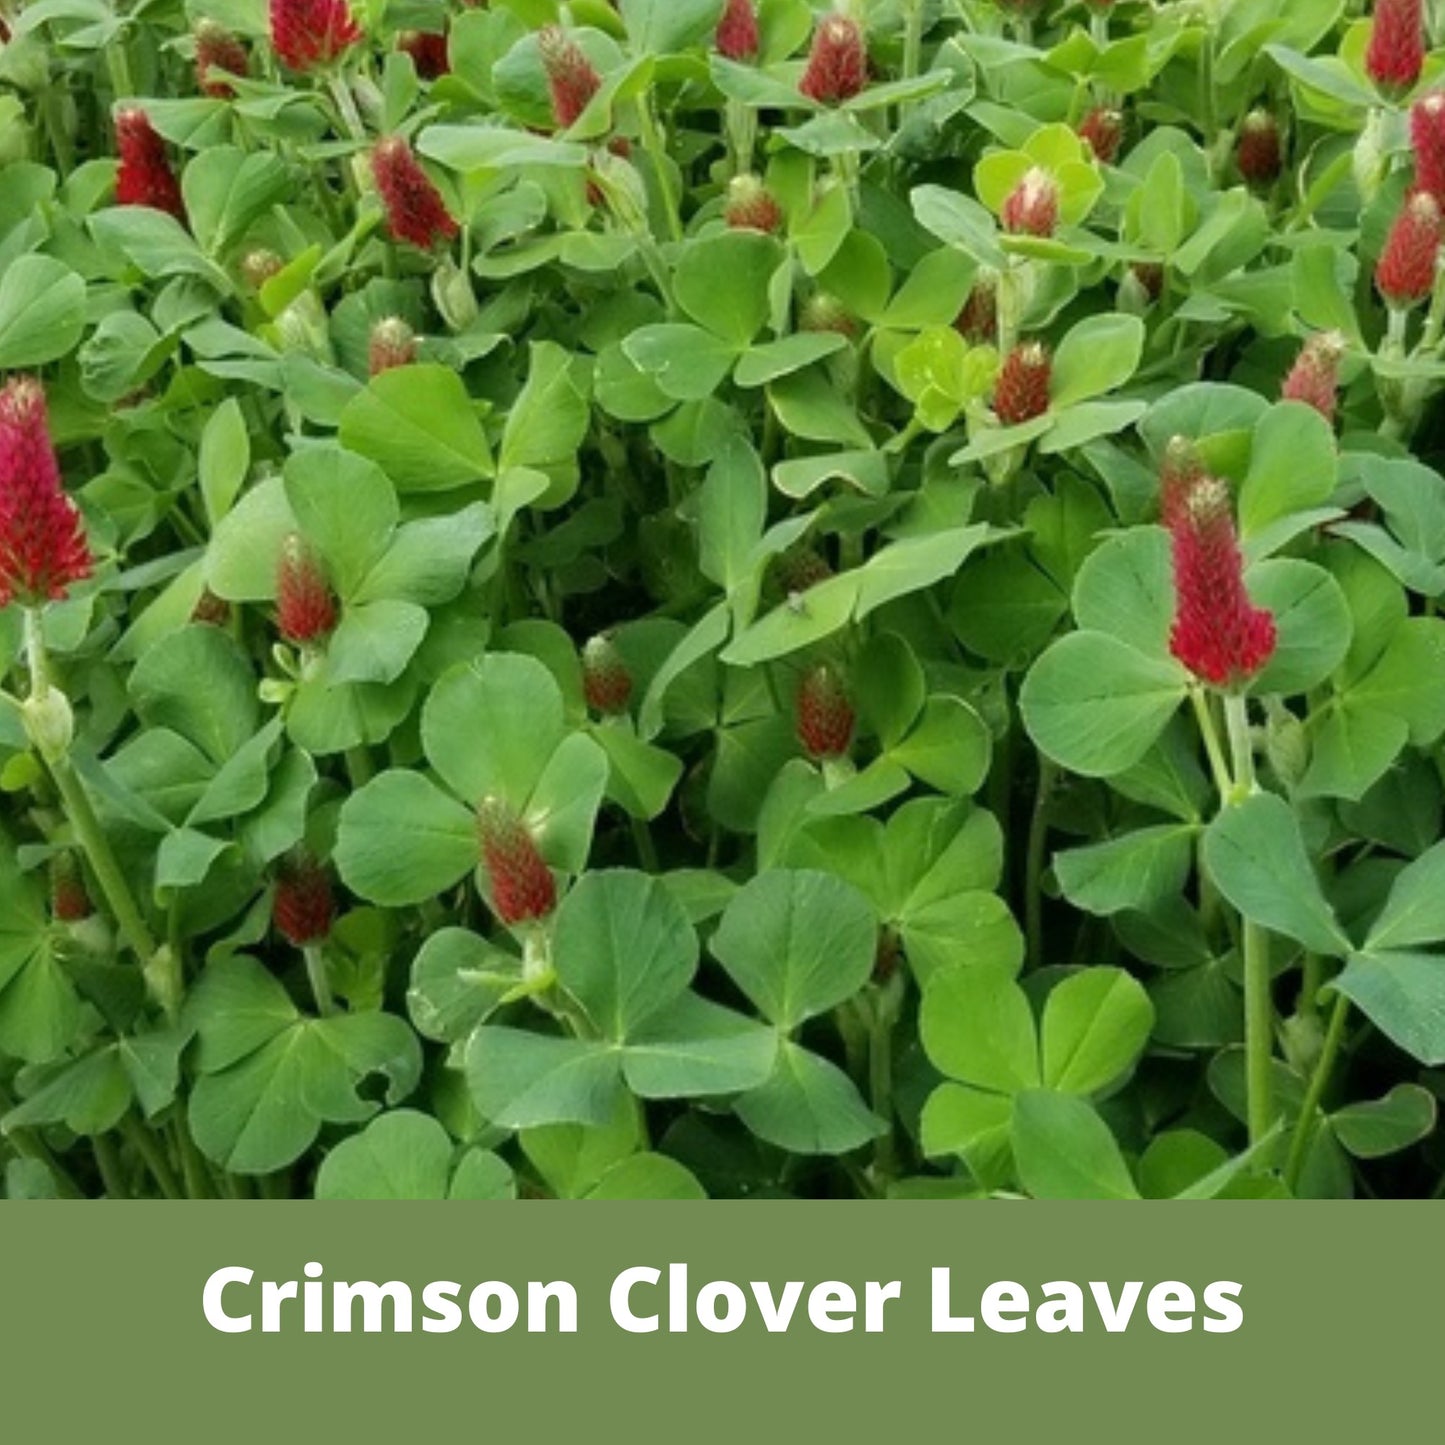 Crimson Clover Eco-Friendly Seeding Kit